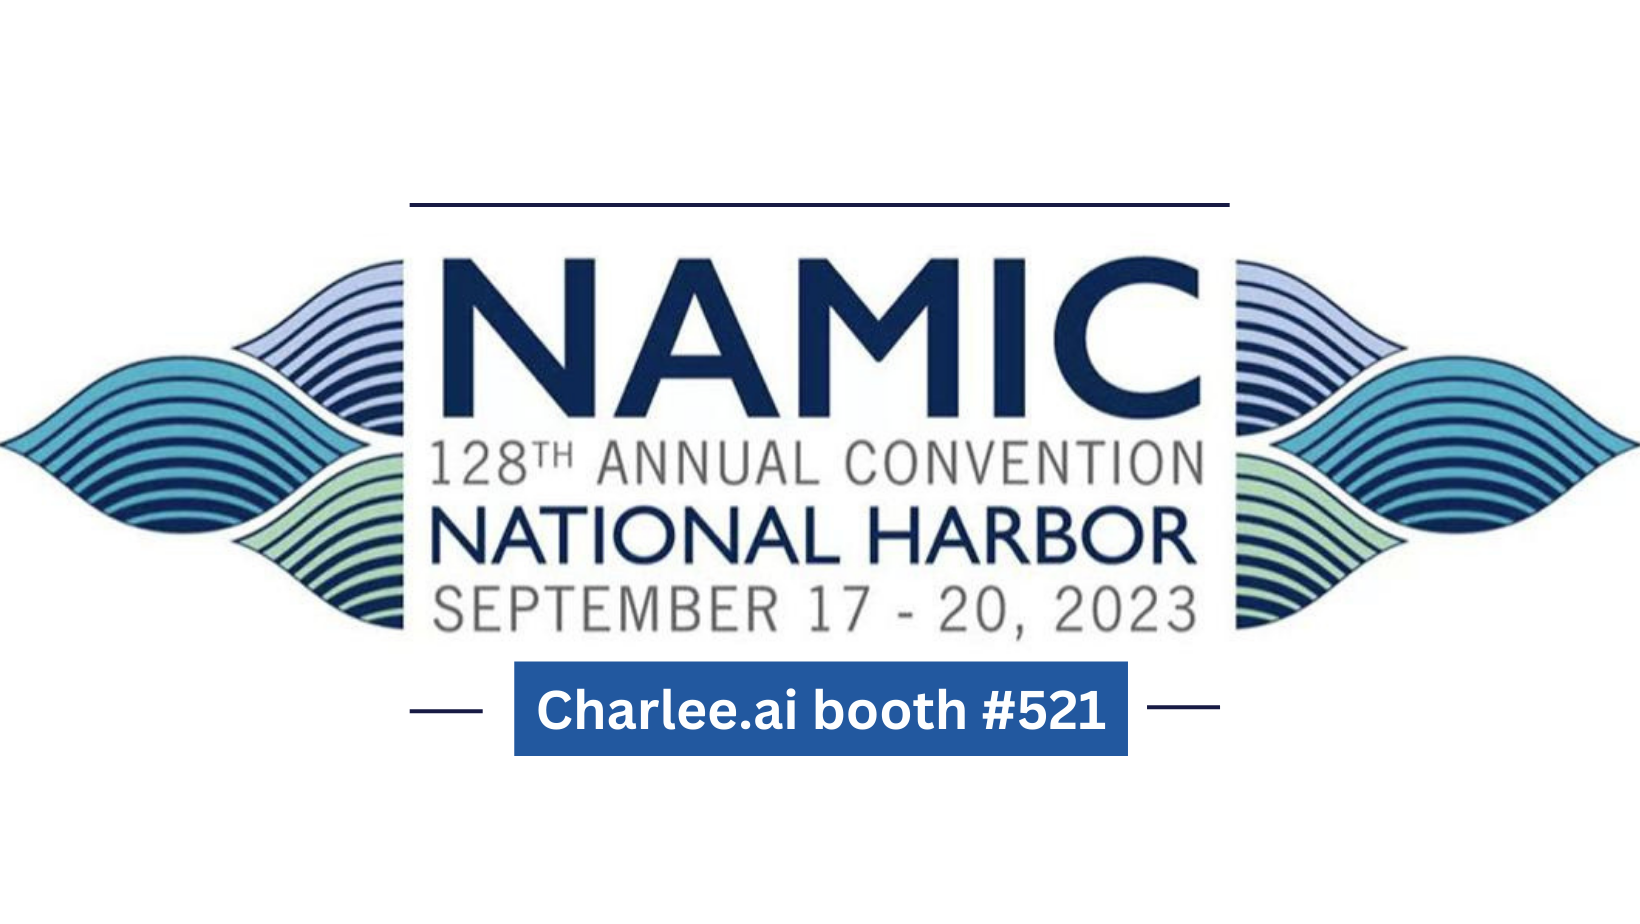 NAMIC Annual Convention CHARLEE.AI